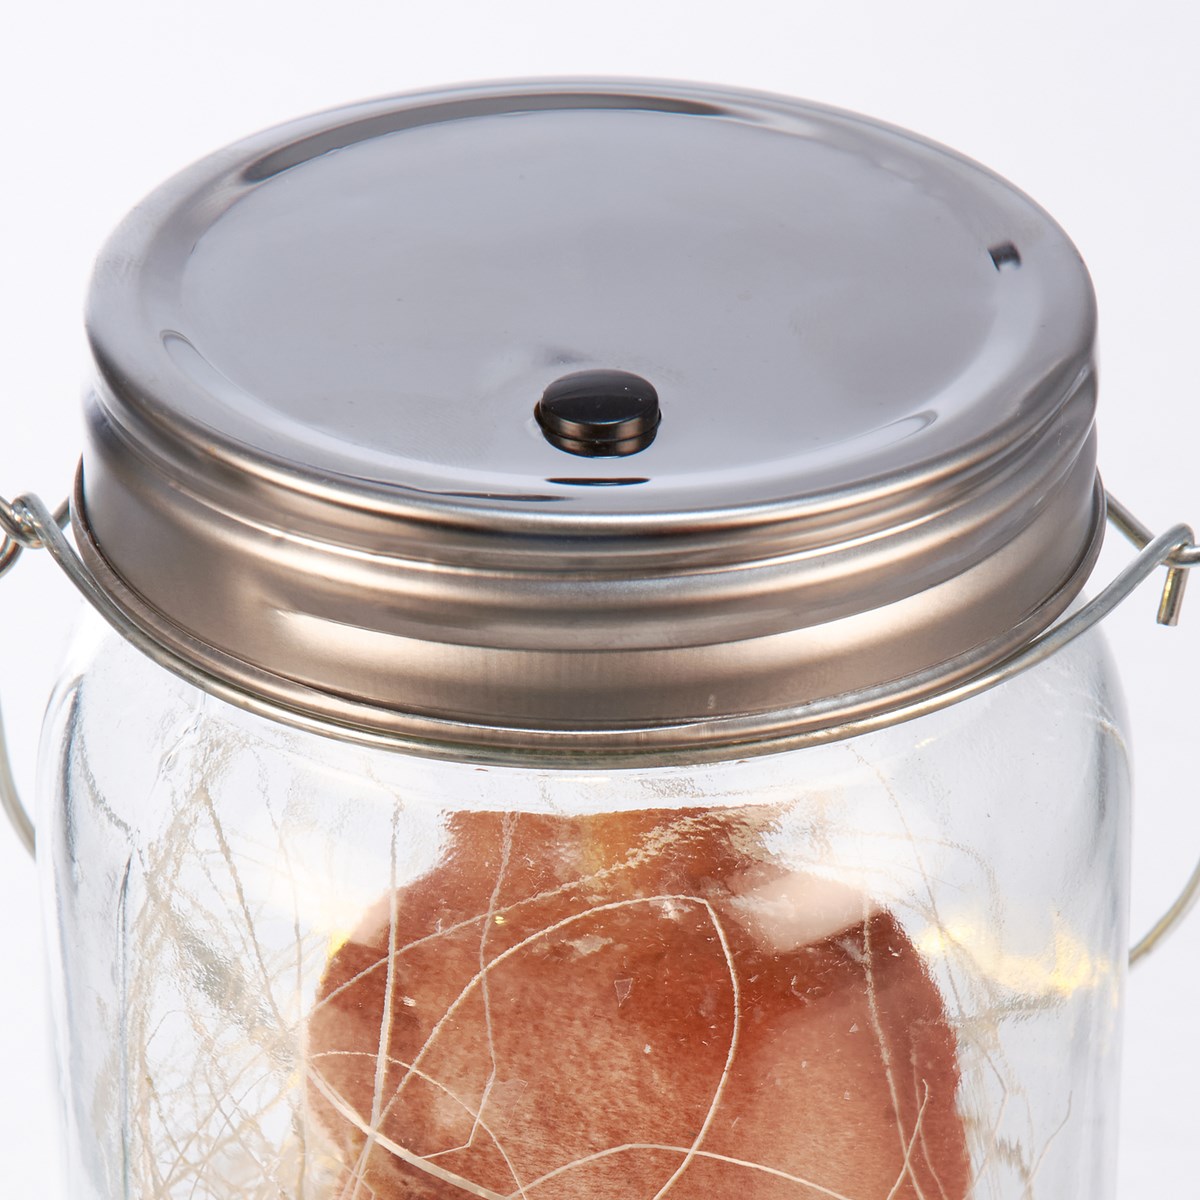 Mushroom Mason Jar Lantern - Glass, Plastic, Lights, Metal, Wire